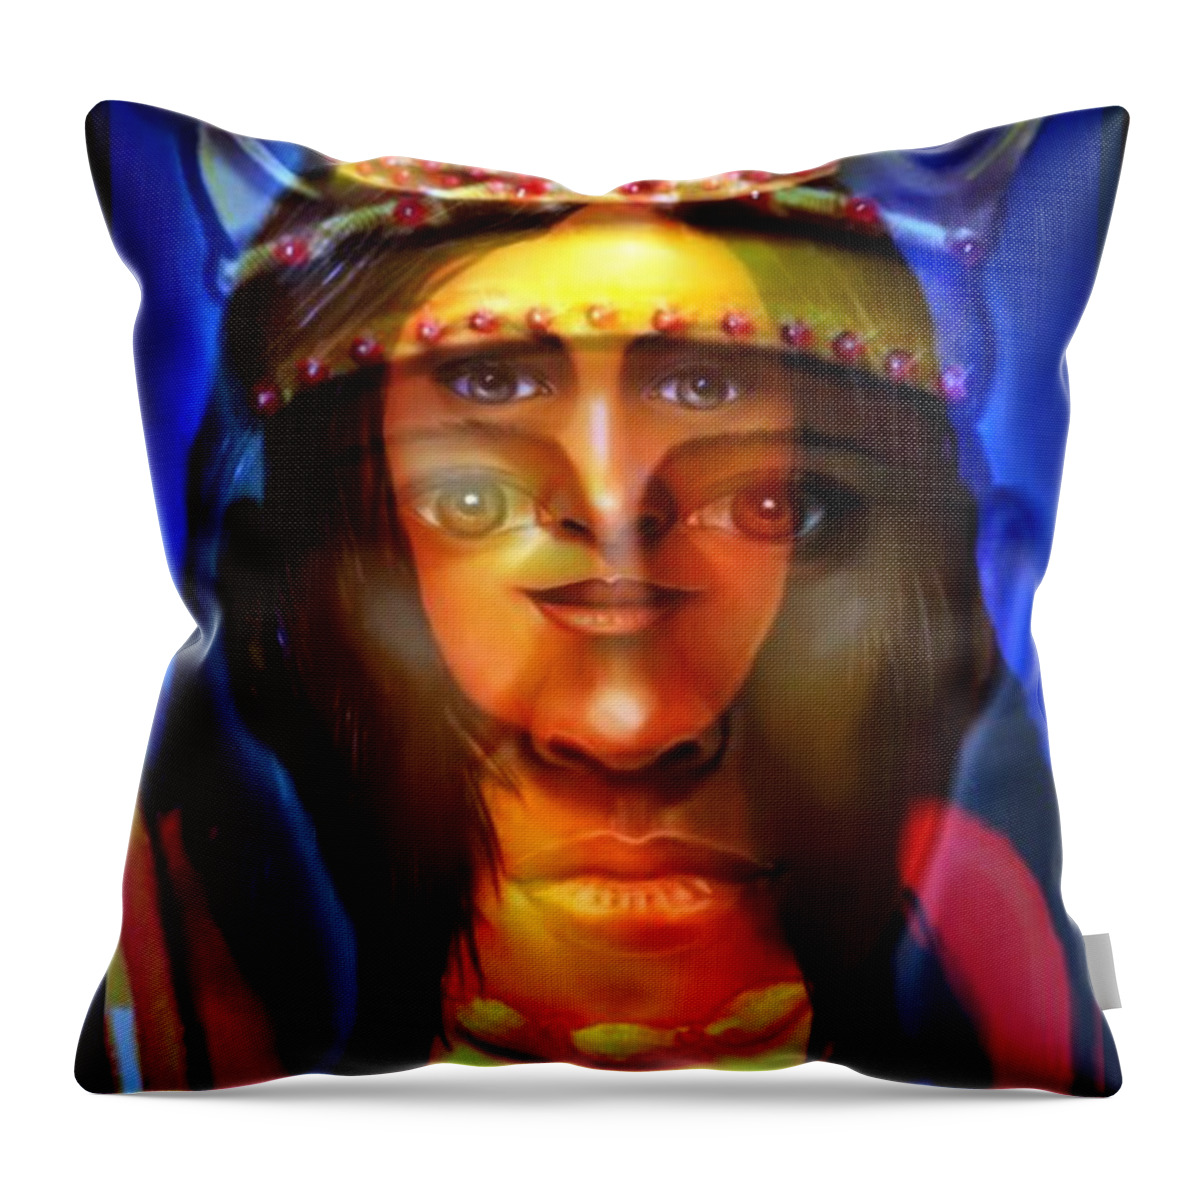 Santa Barbara Throw Pillow featuring the digital art Santa Barbara and Chango by Carmen Cordova